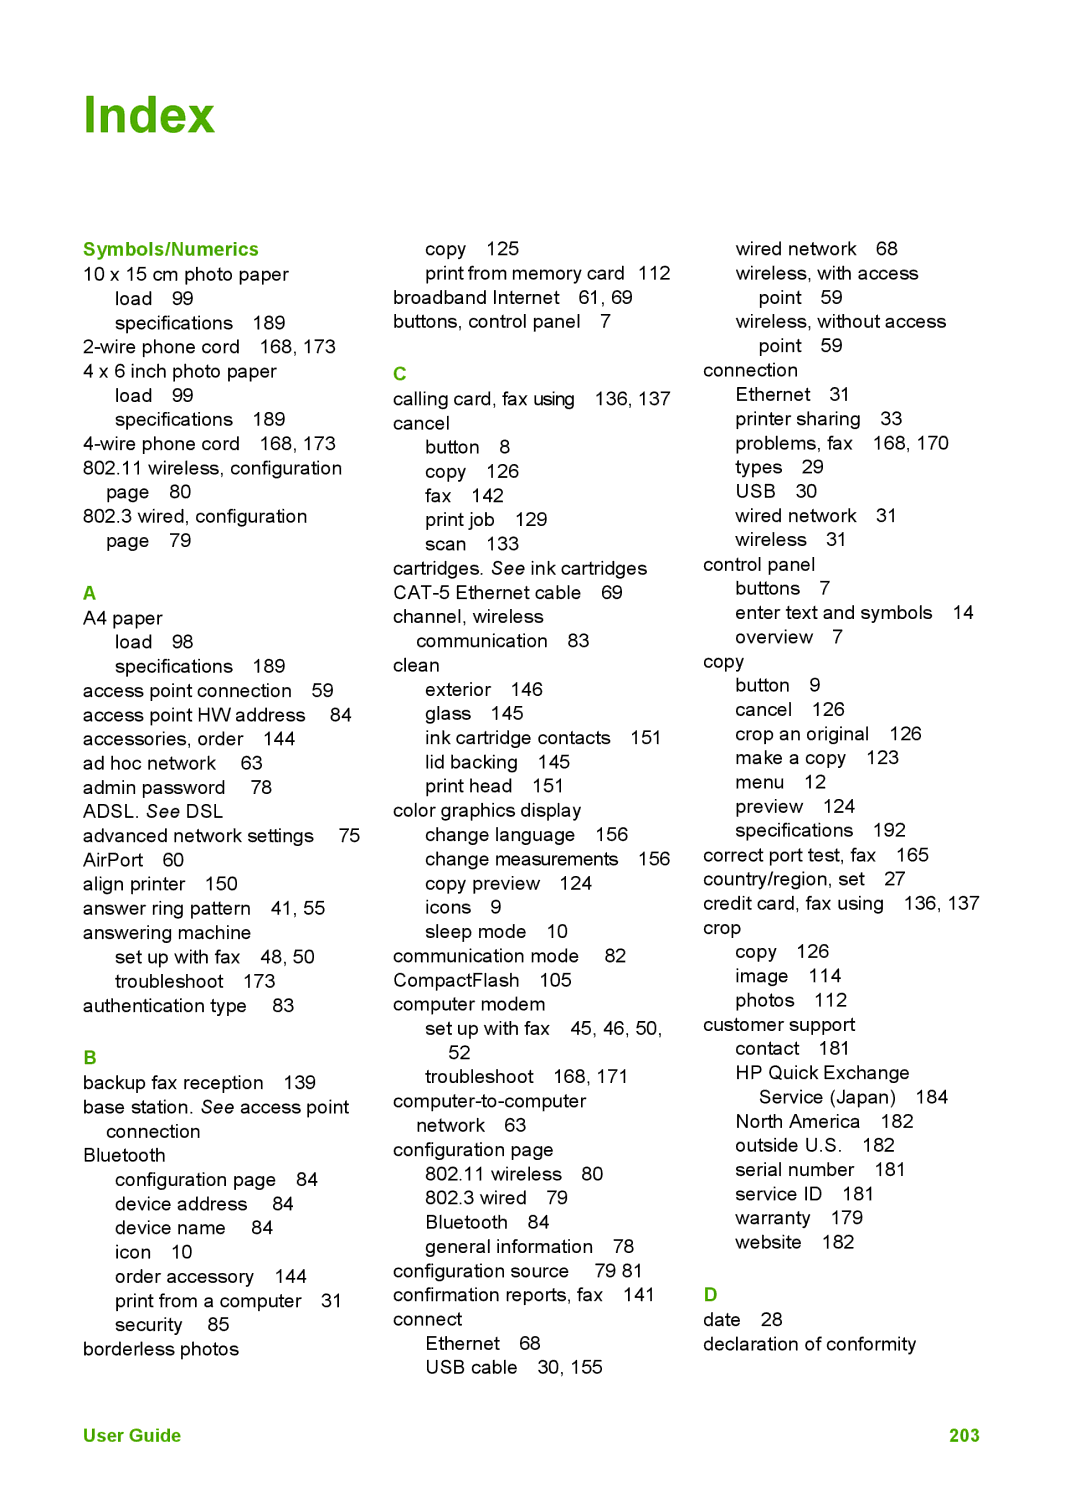 HP 3300 manual Index, Symbols/Numerics 